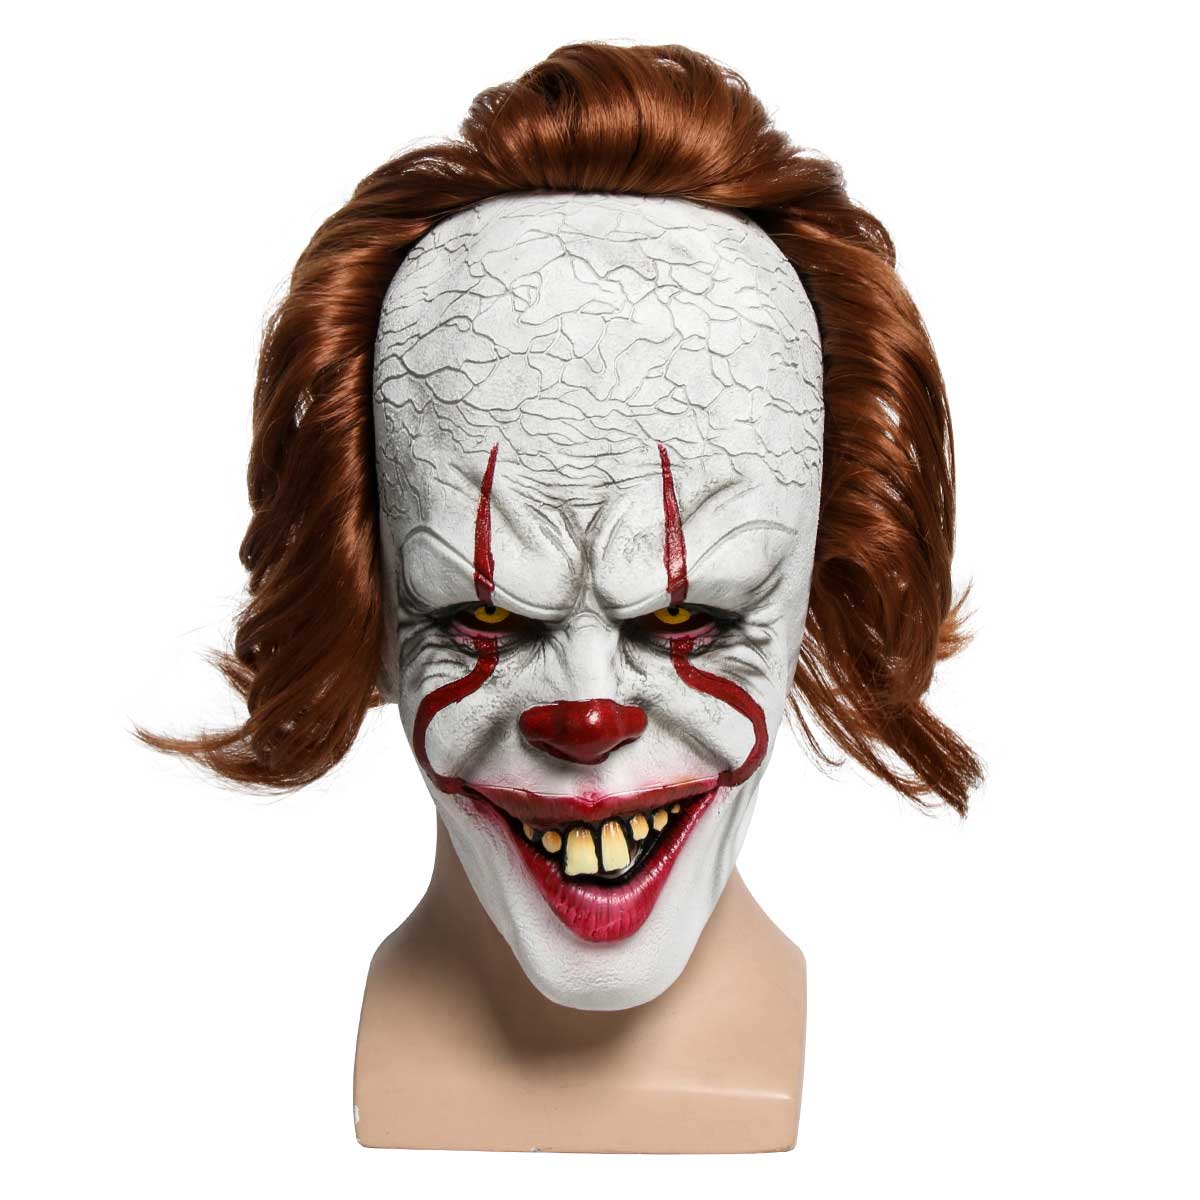 IT KApITEL 2 pennyWise gruselige Halloween Cosplay Latexmaske Stephen King's IT Kostüm Wig-Takerlama